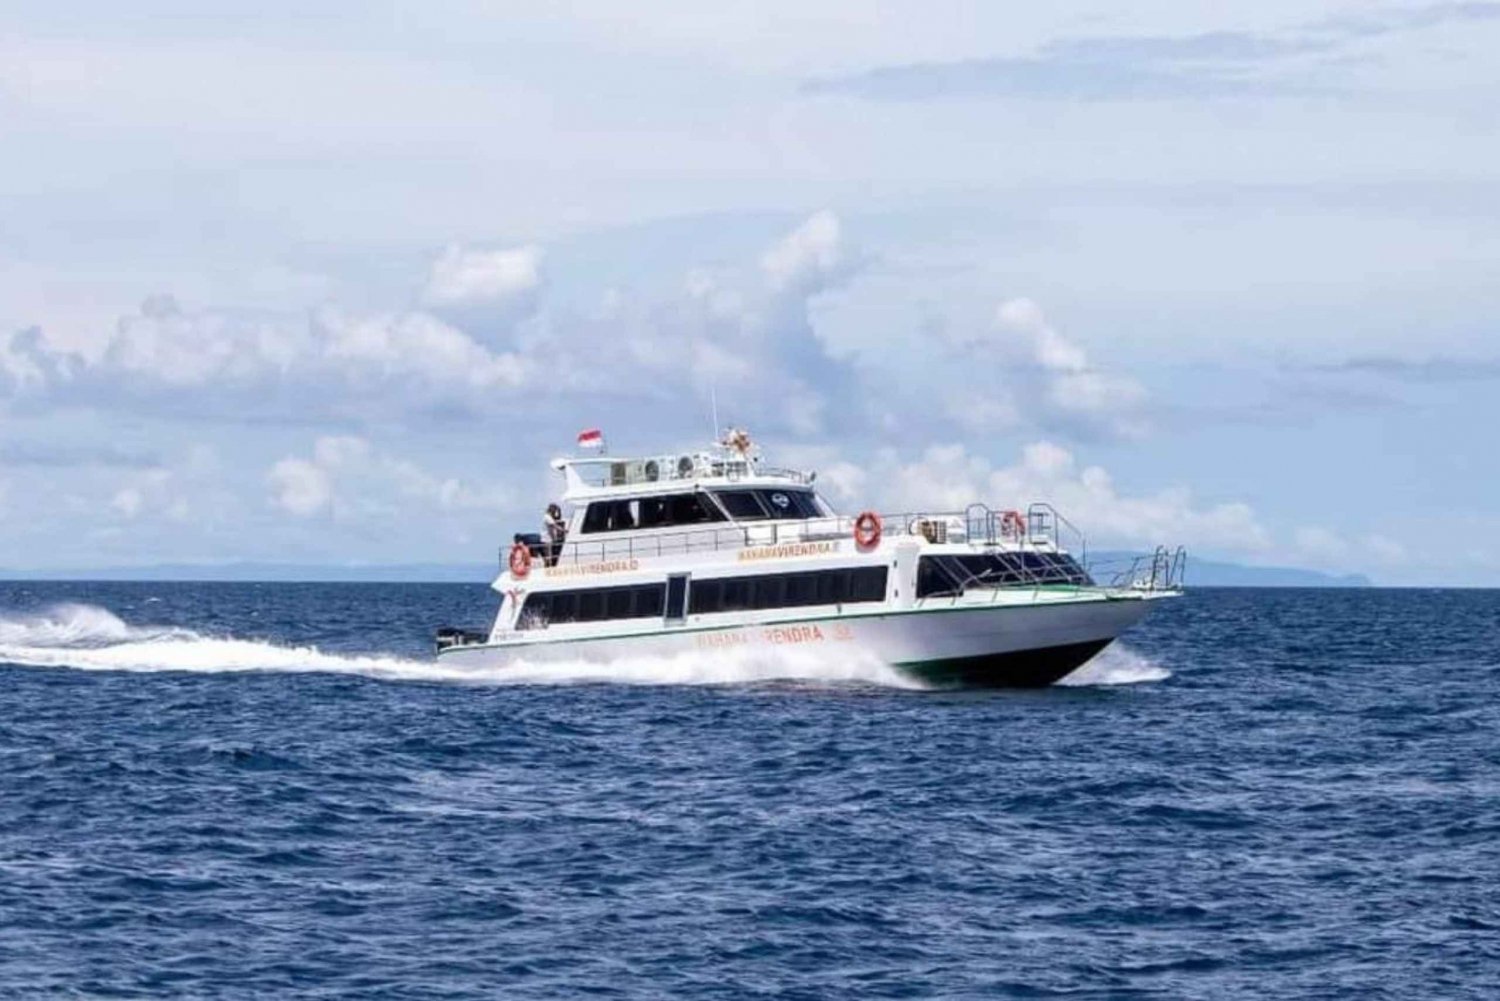 Depuis Bali : Transfert simple en bateau rapide vers Lombok